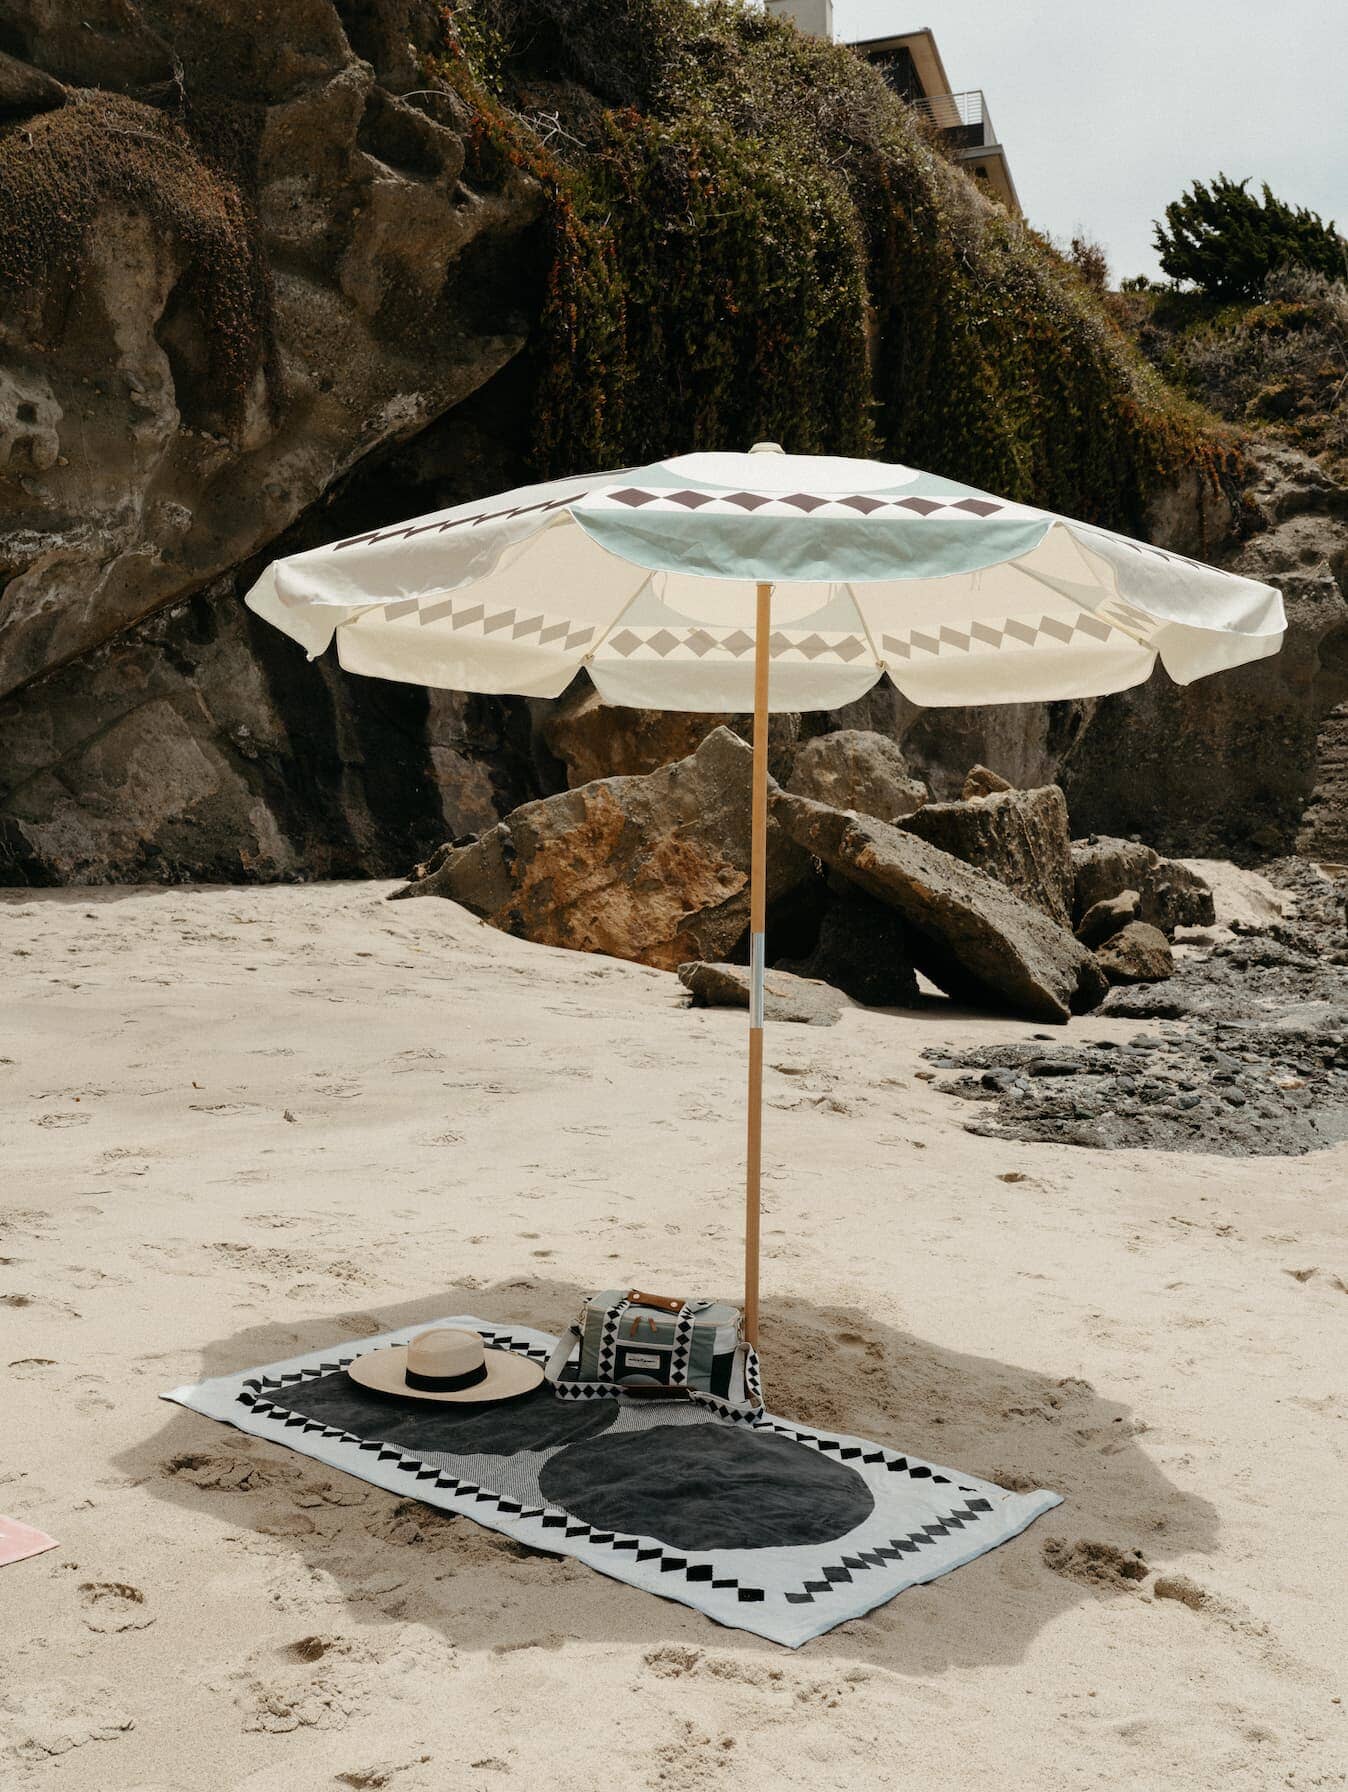 Diamond green amalfi umbrella, beach towel, cooler bag and hat at a beach